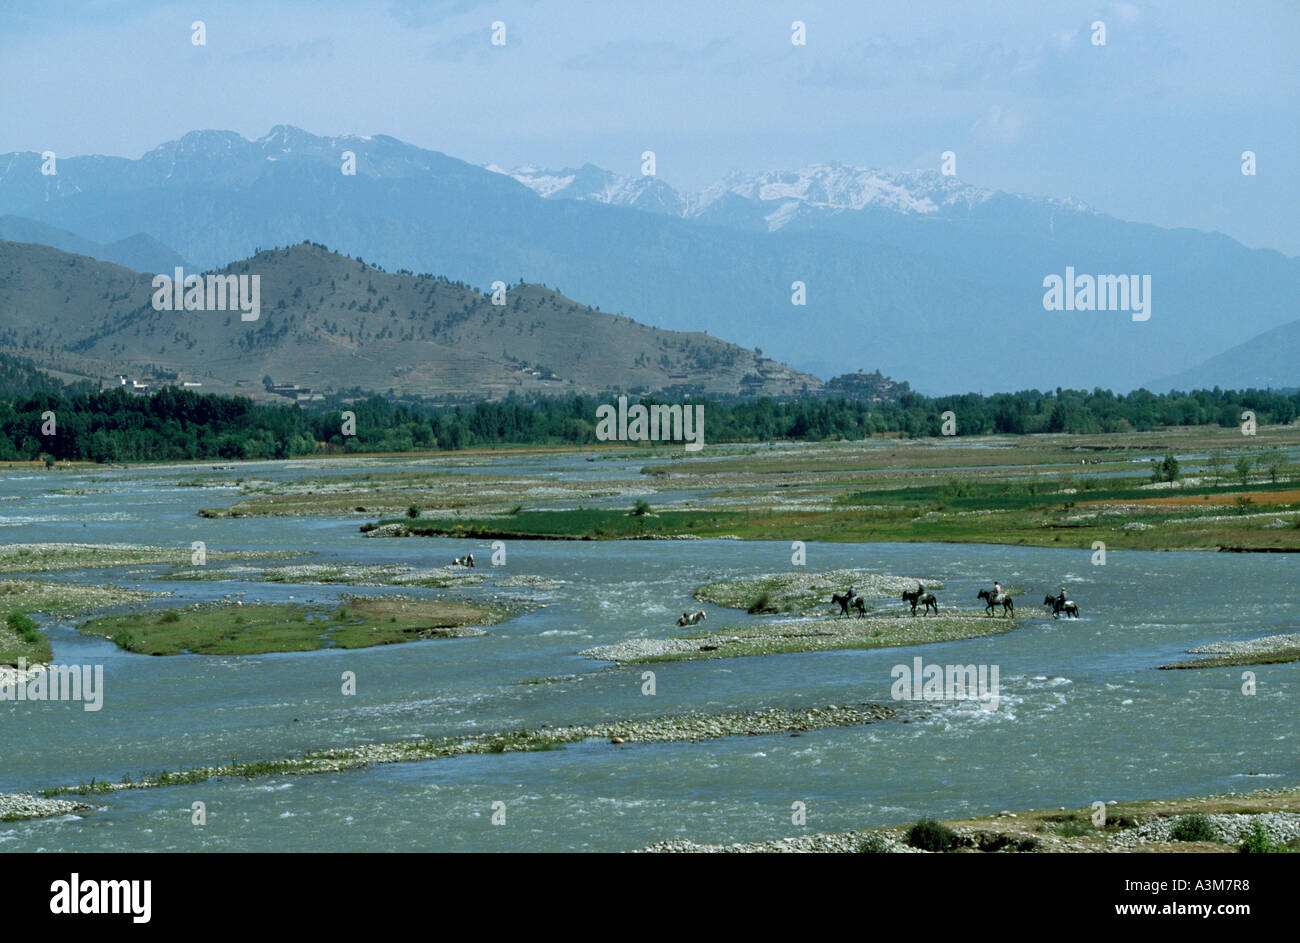 The Swat river, Swat Valley, Pakistan. Stock Photo